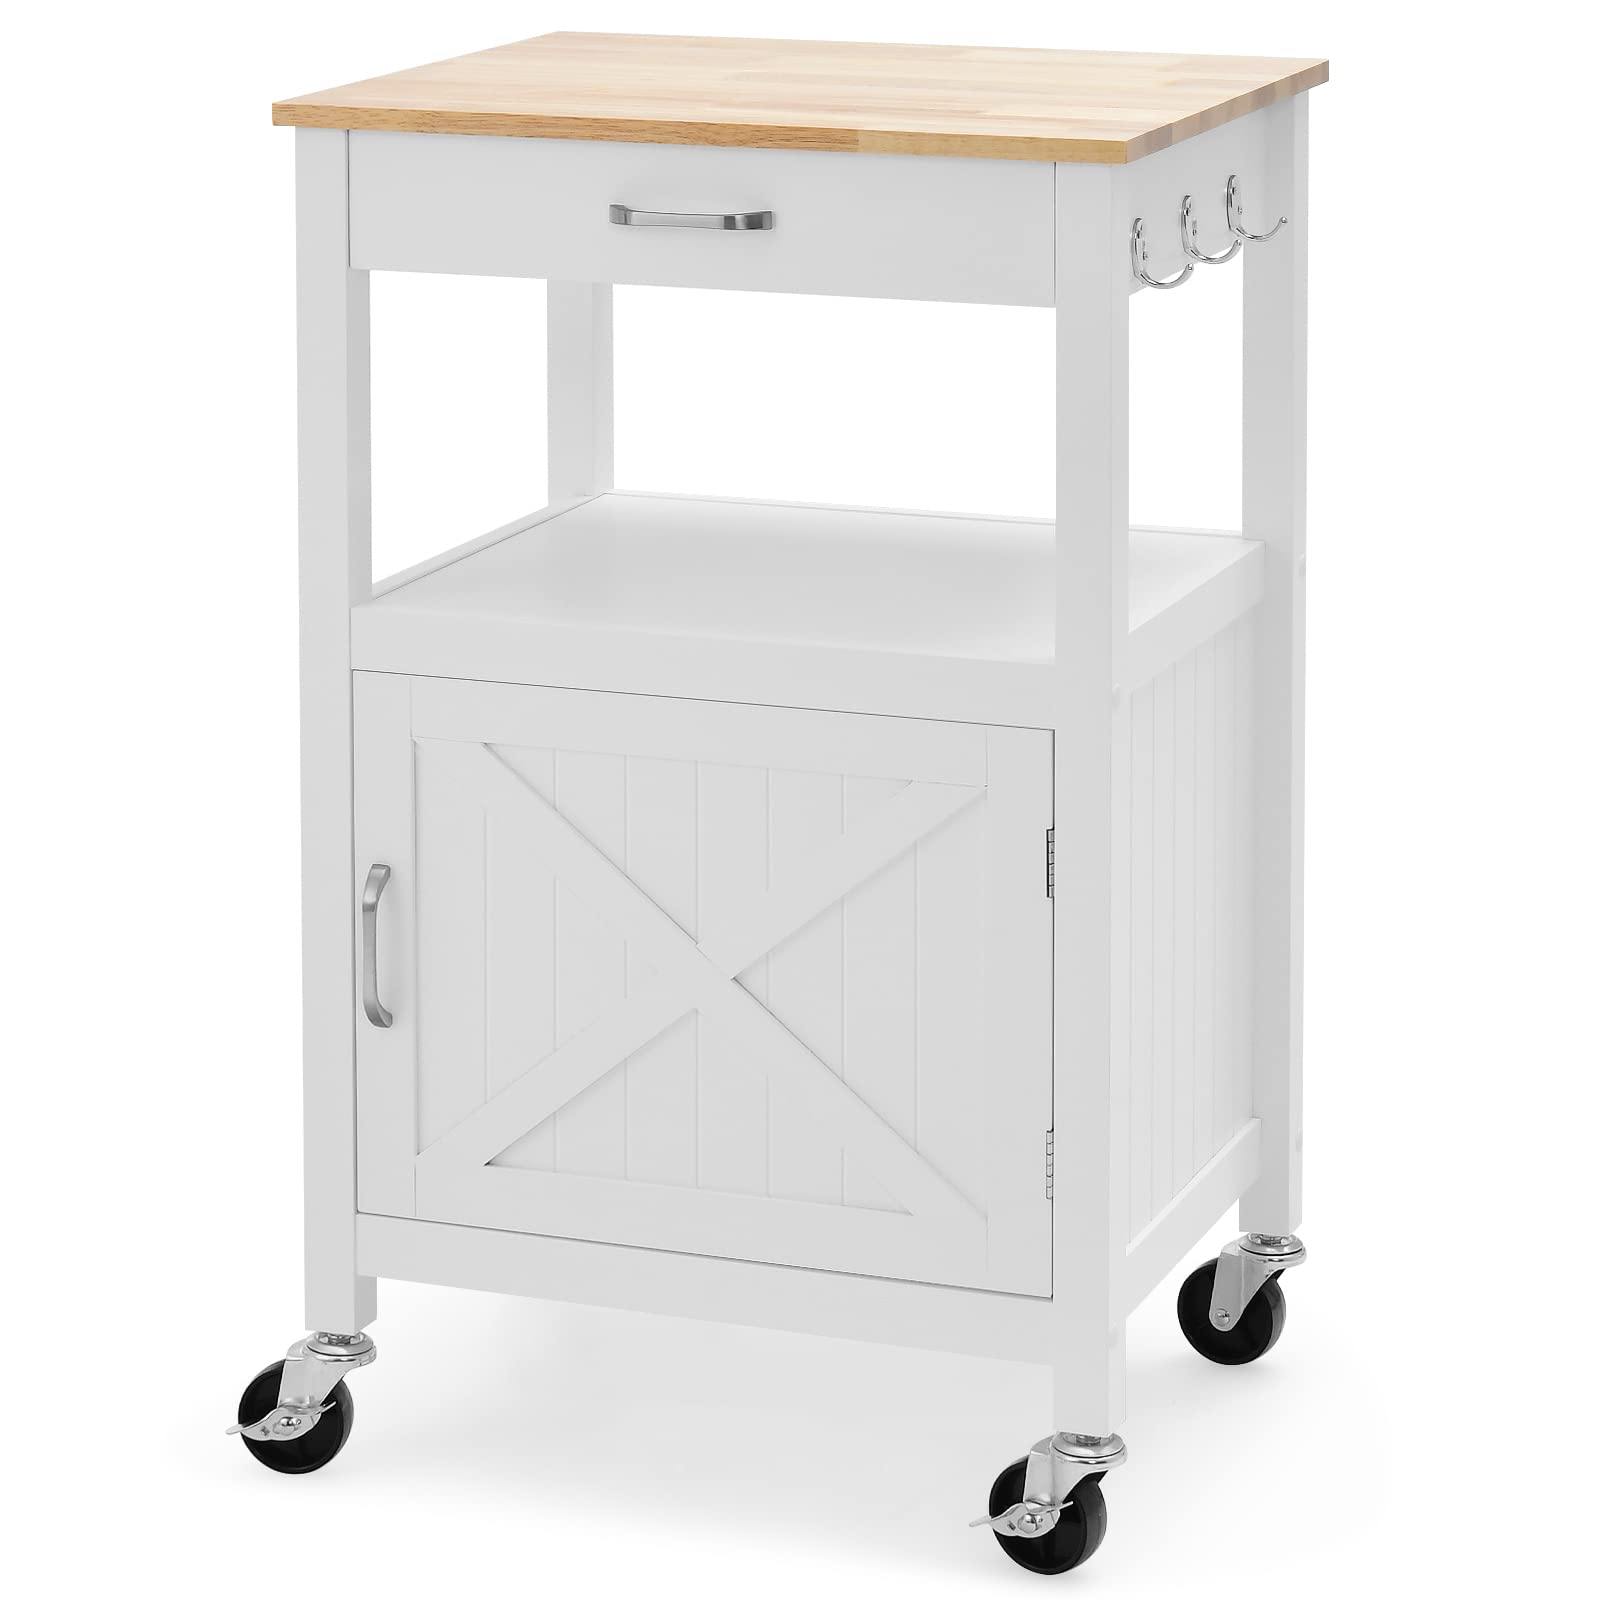 Giantex Kitchen Cart with Storage